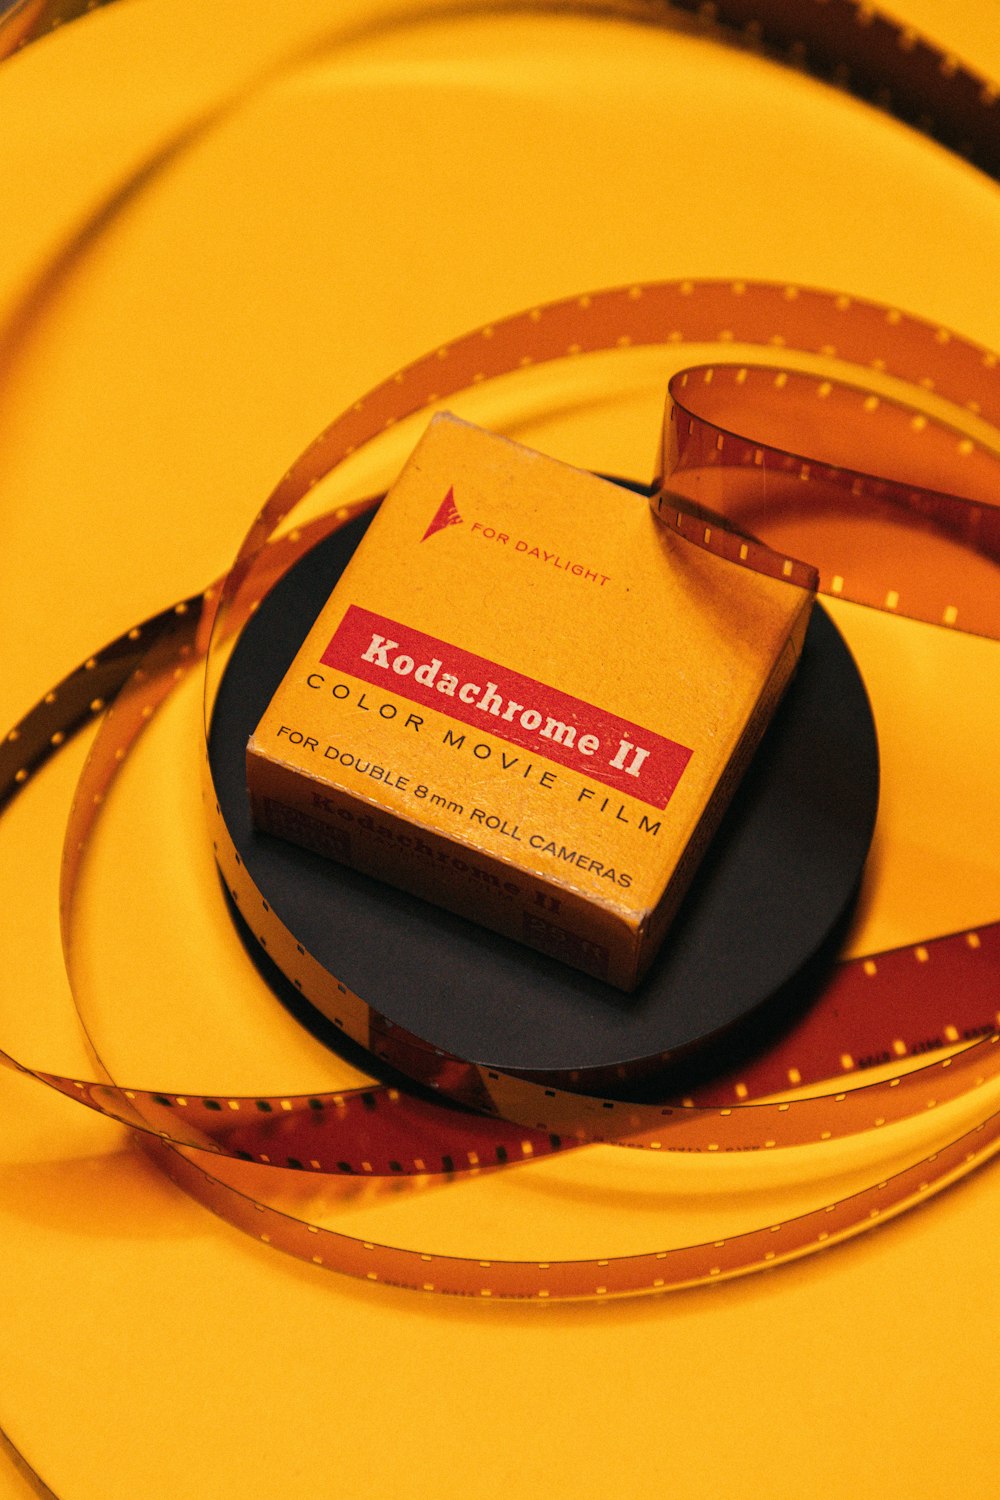 Kodachrome 2 컬러 영화 필름 상자